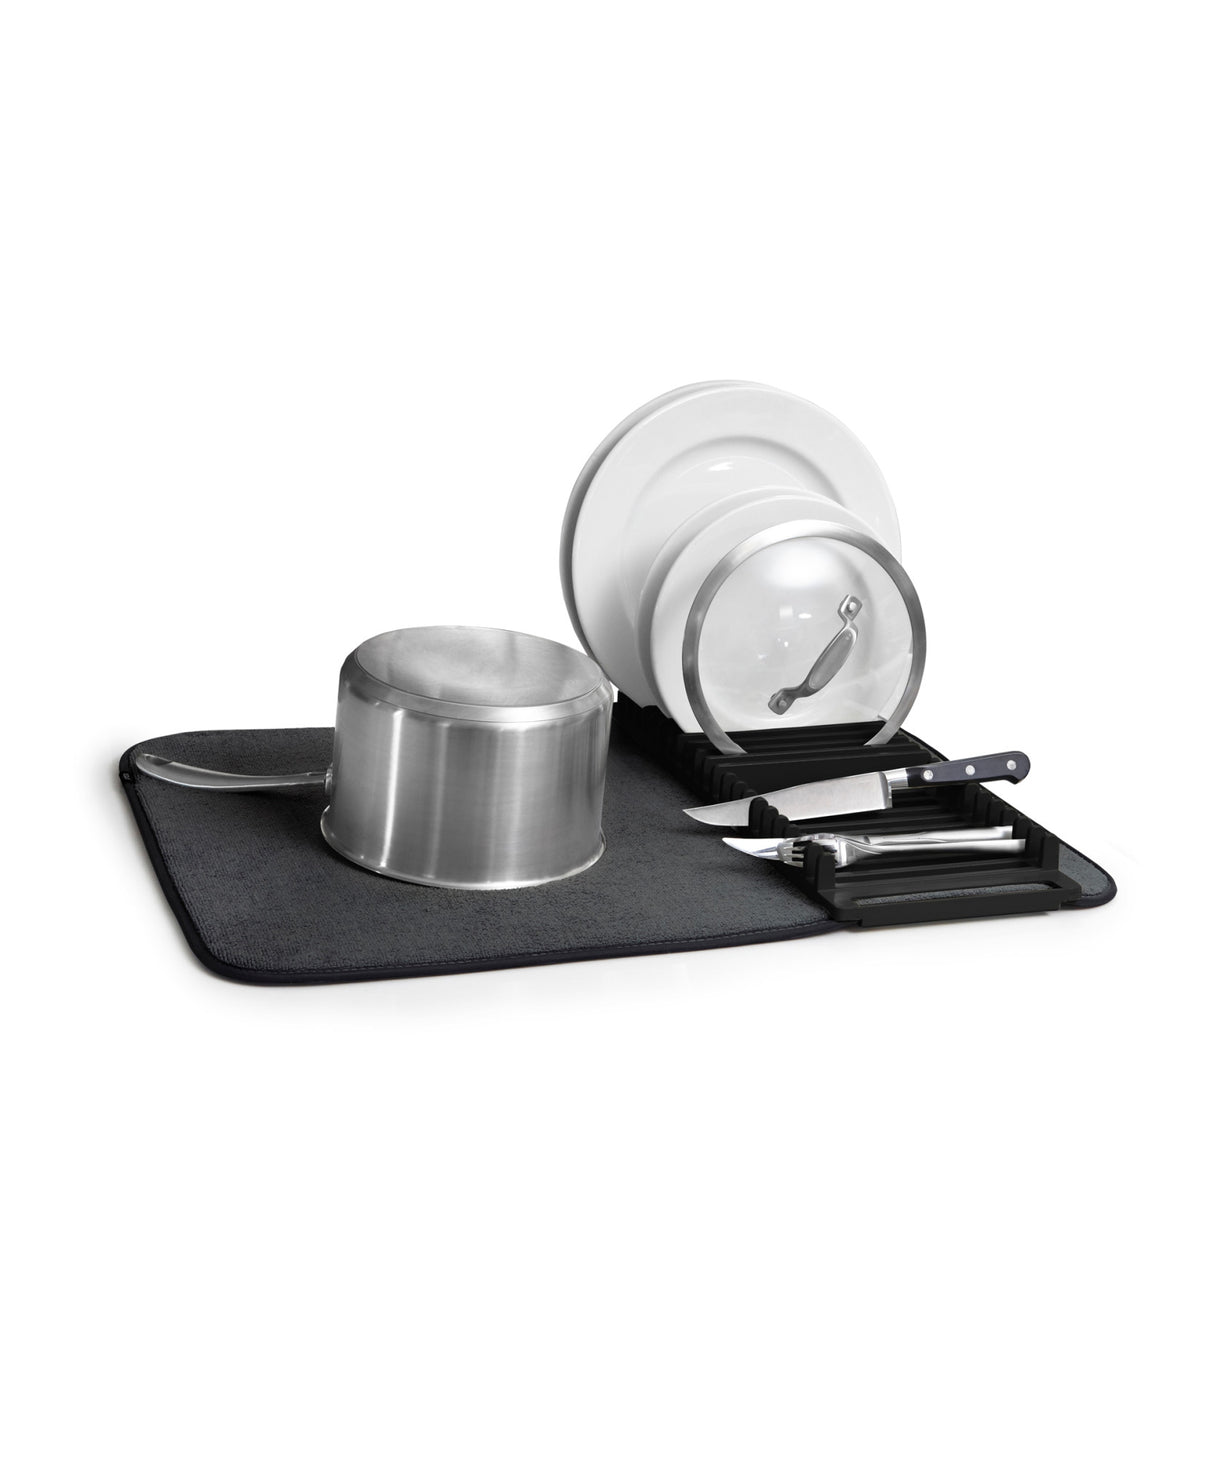 Umbra Tub Dish Drying Rack – Lightweight Self-Draining Dish Rack